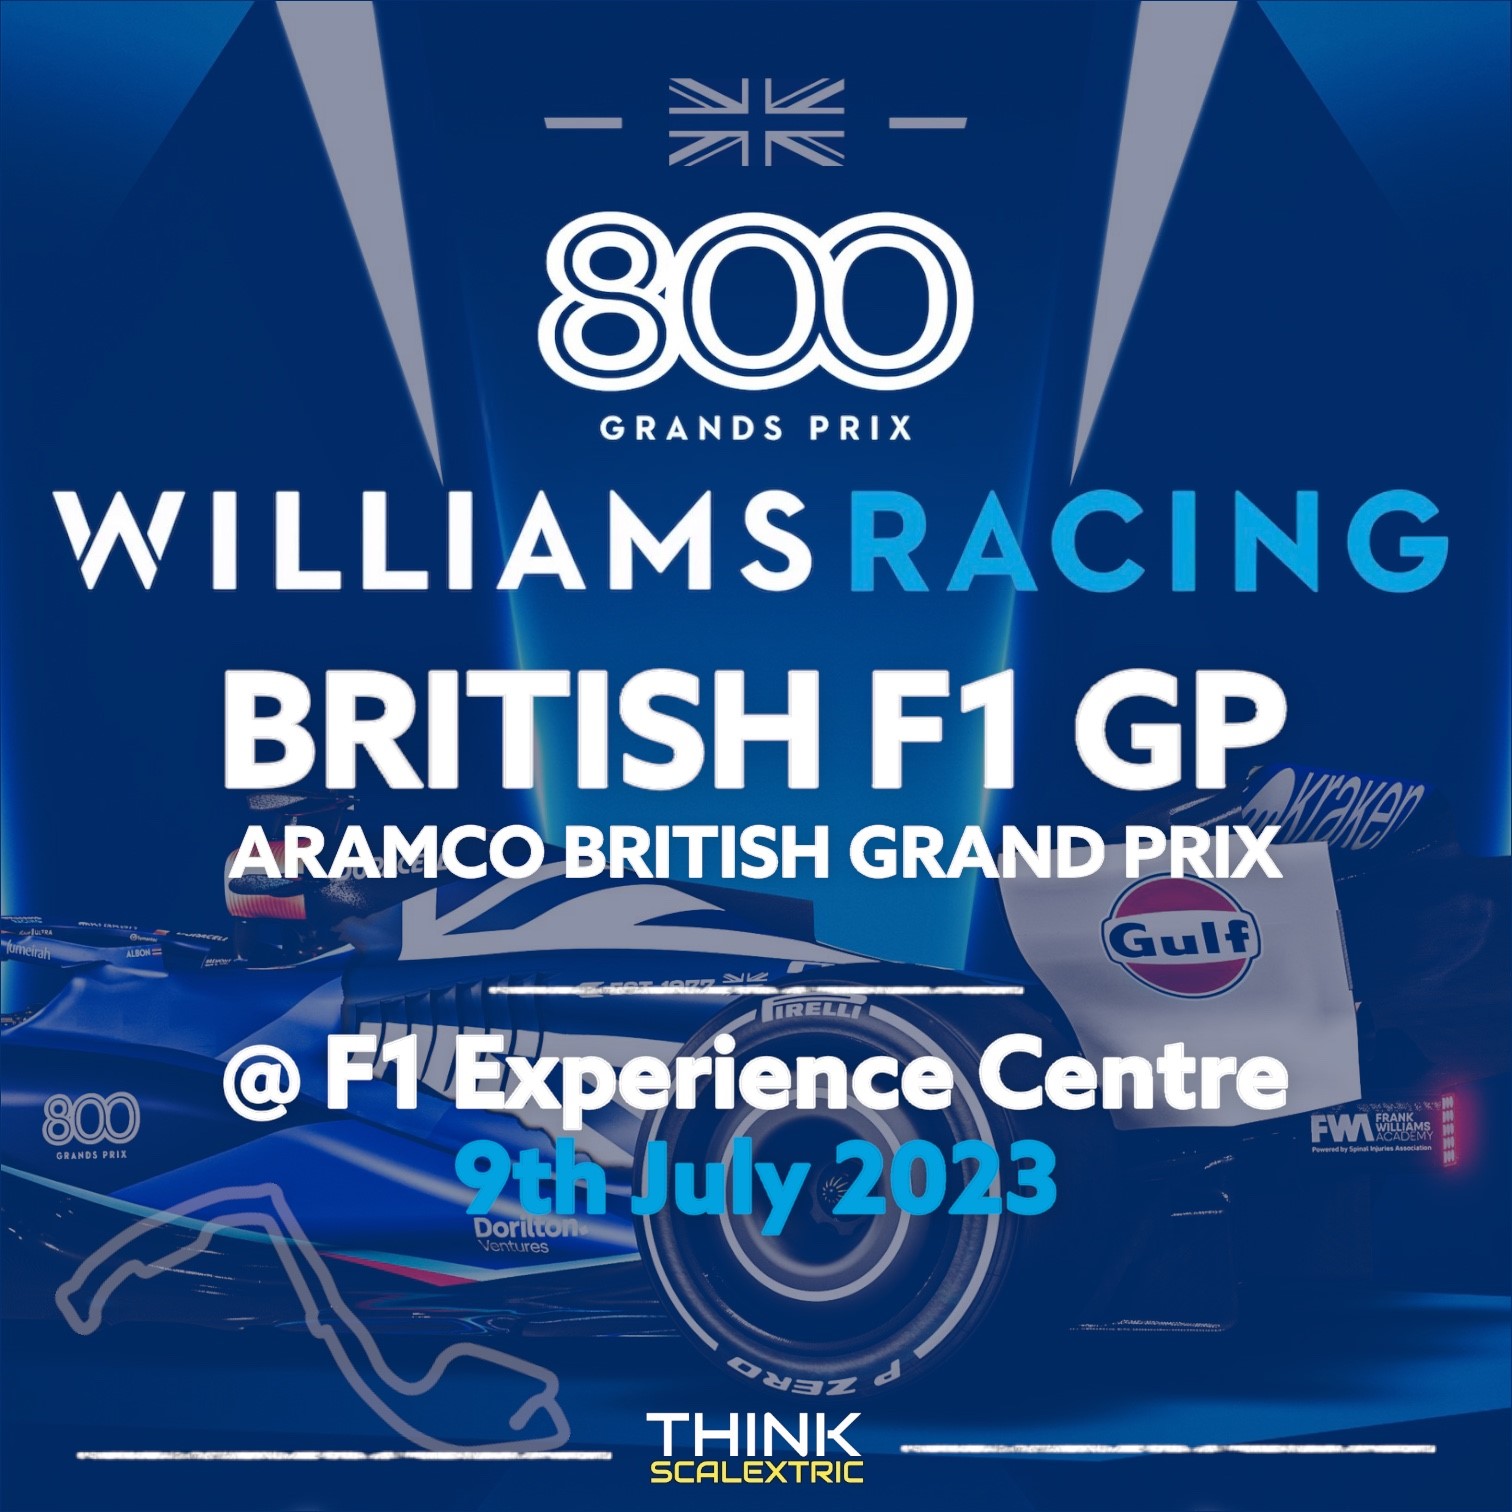 williams f1 racing race day hospitality british f1 2023